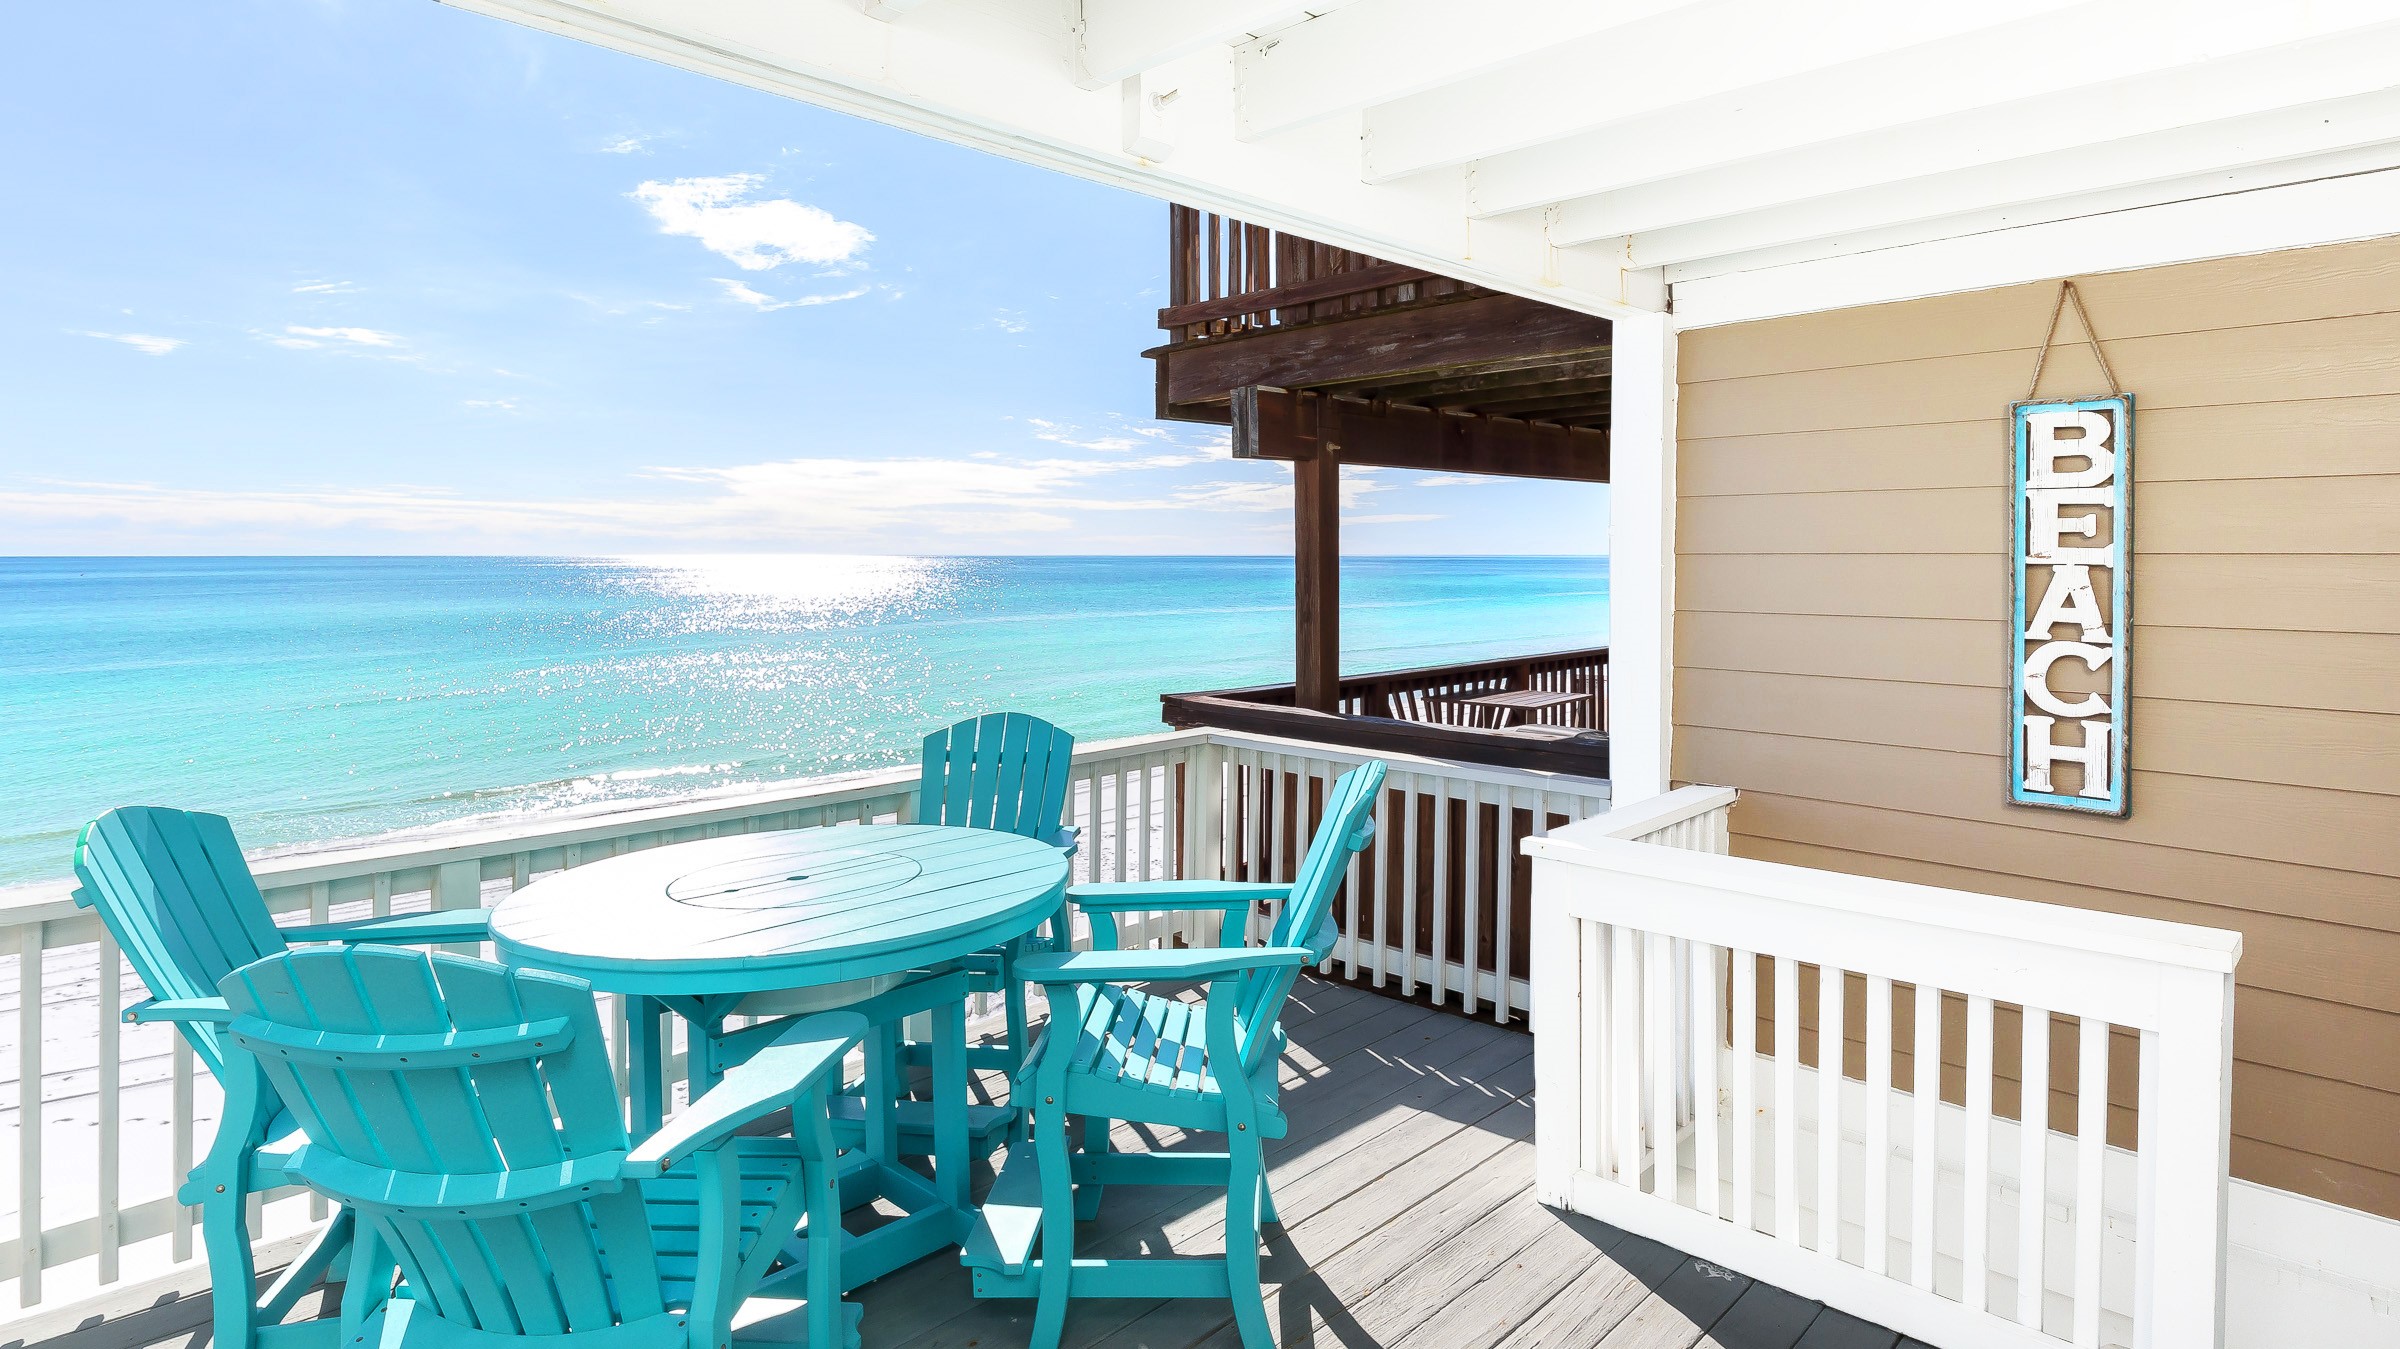 Sanddollar Townhomes Scenic Gulf Drive Miramar Beach Destin Florida Vacation Beach House Rentals by Sunset Resort Rentals